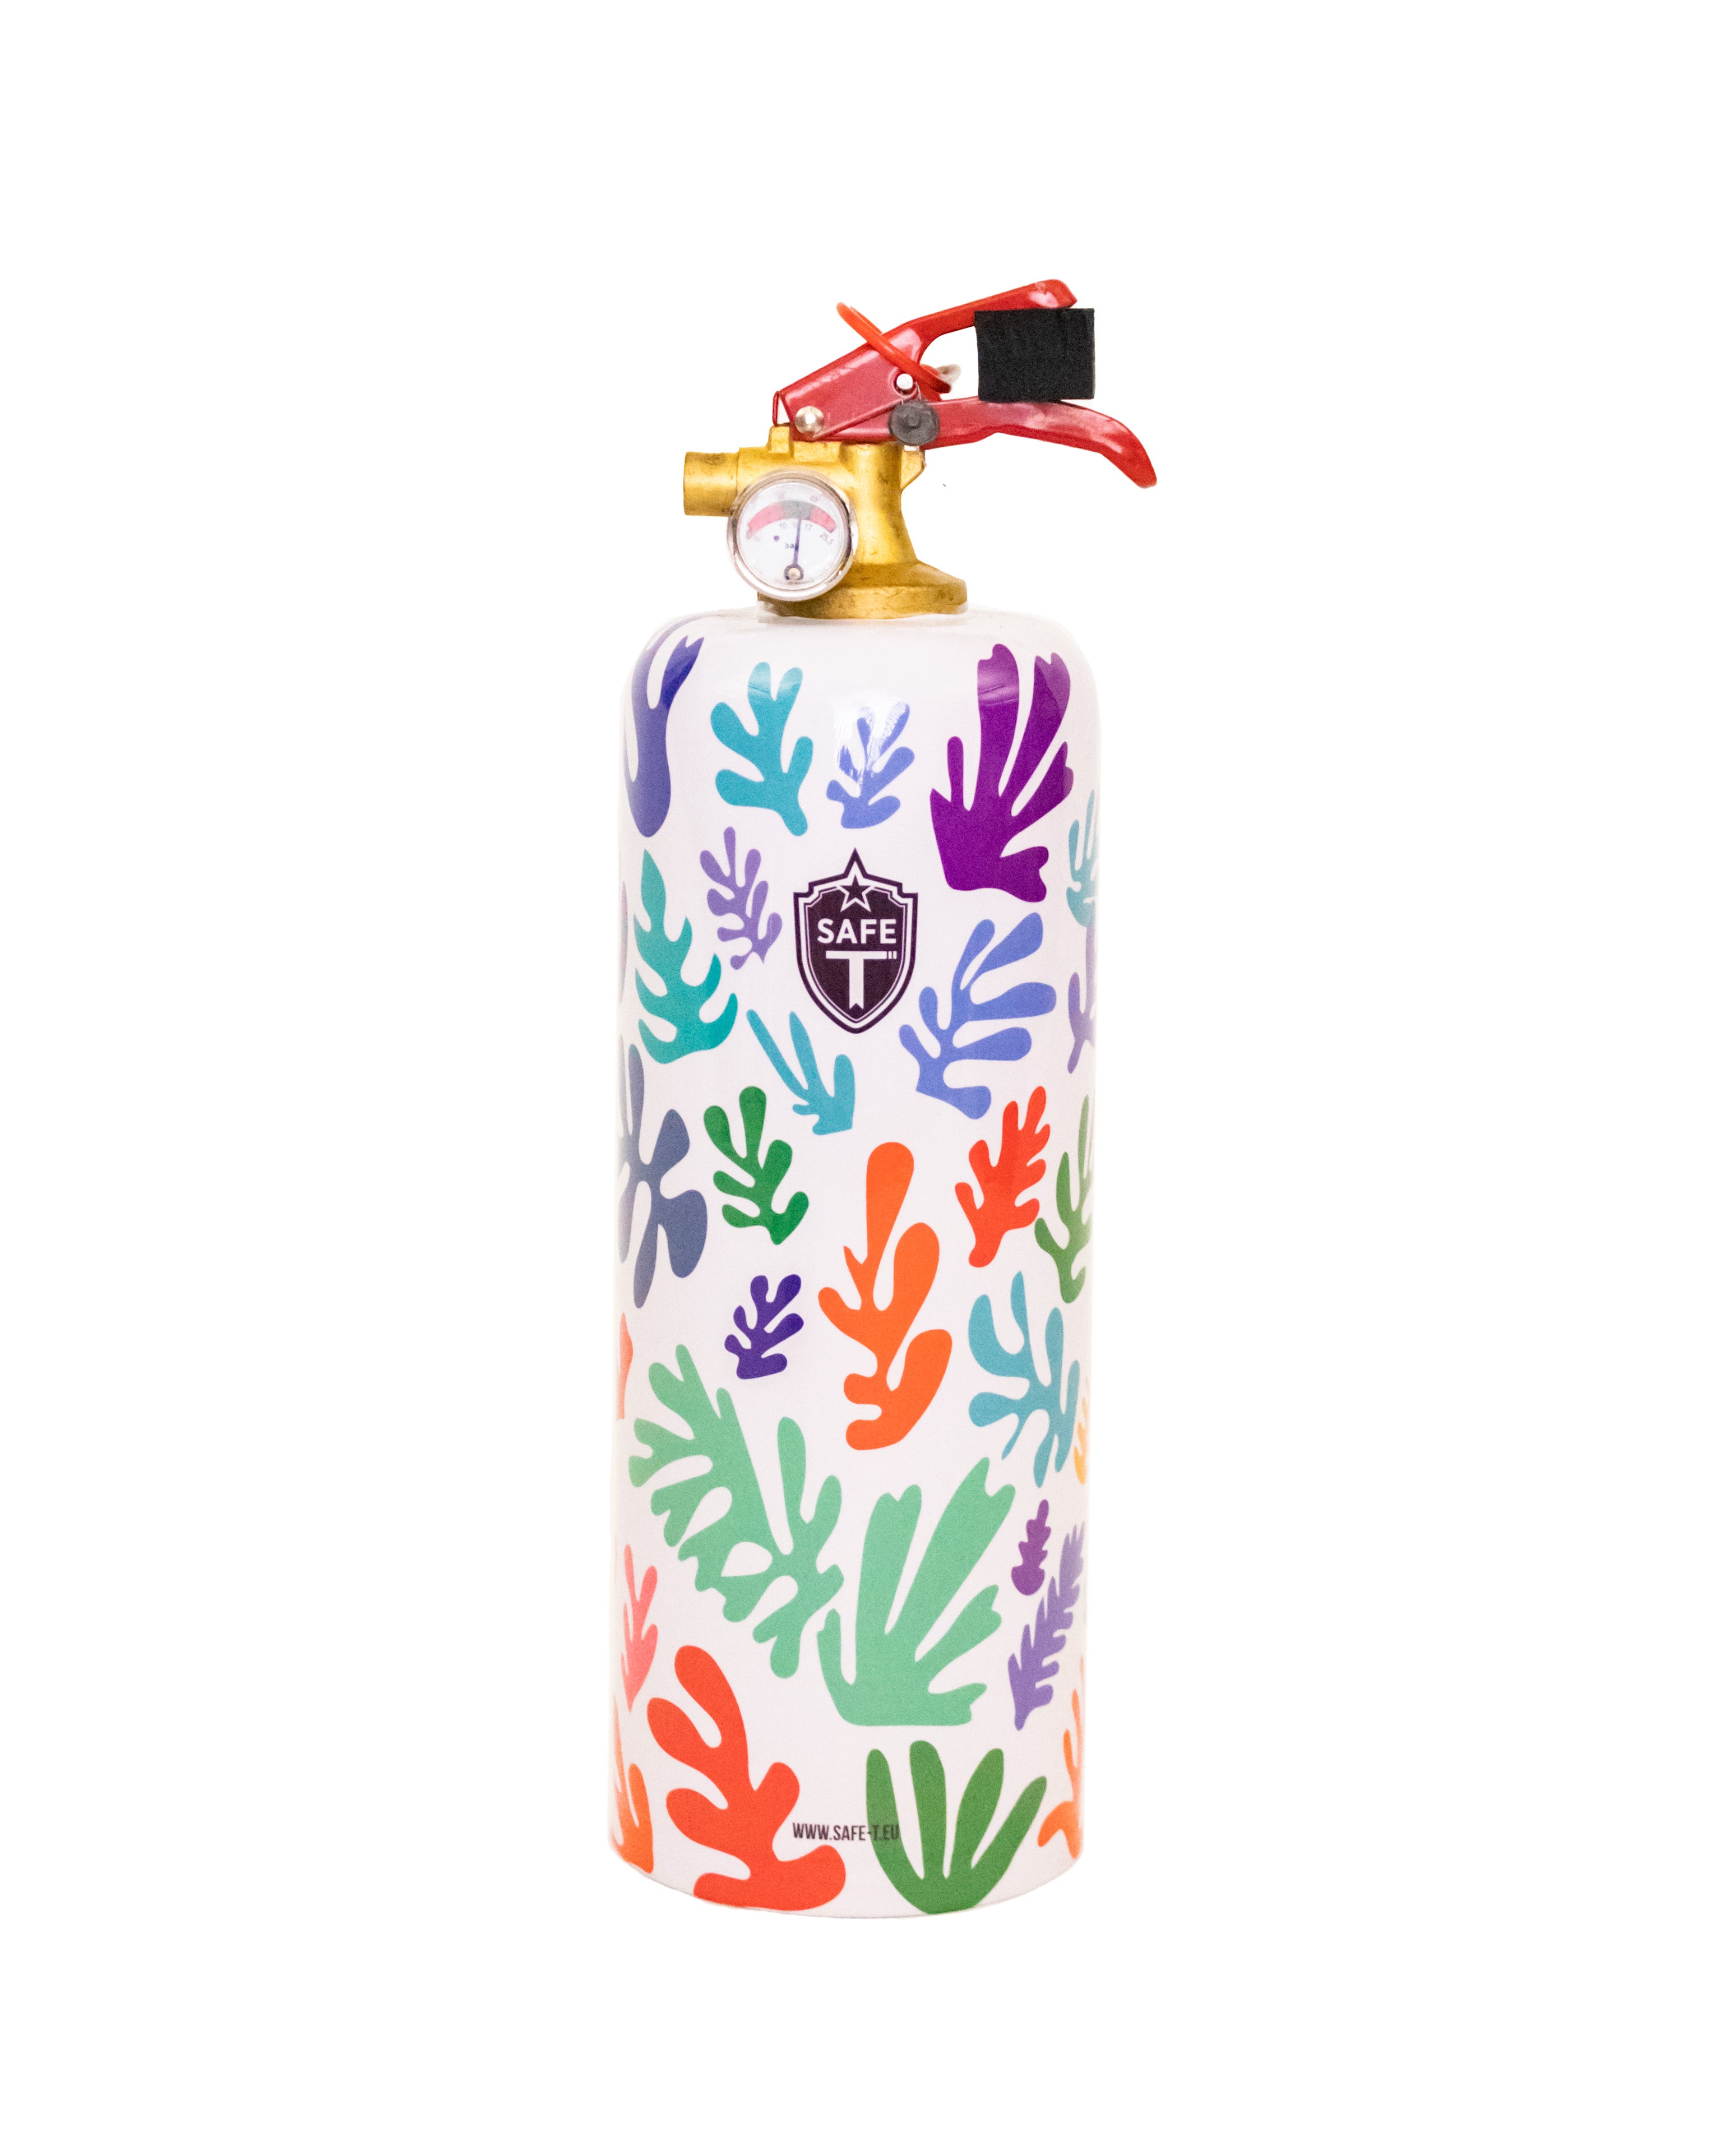 T-Safe Matisse Fire Extinguisher